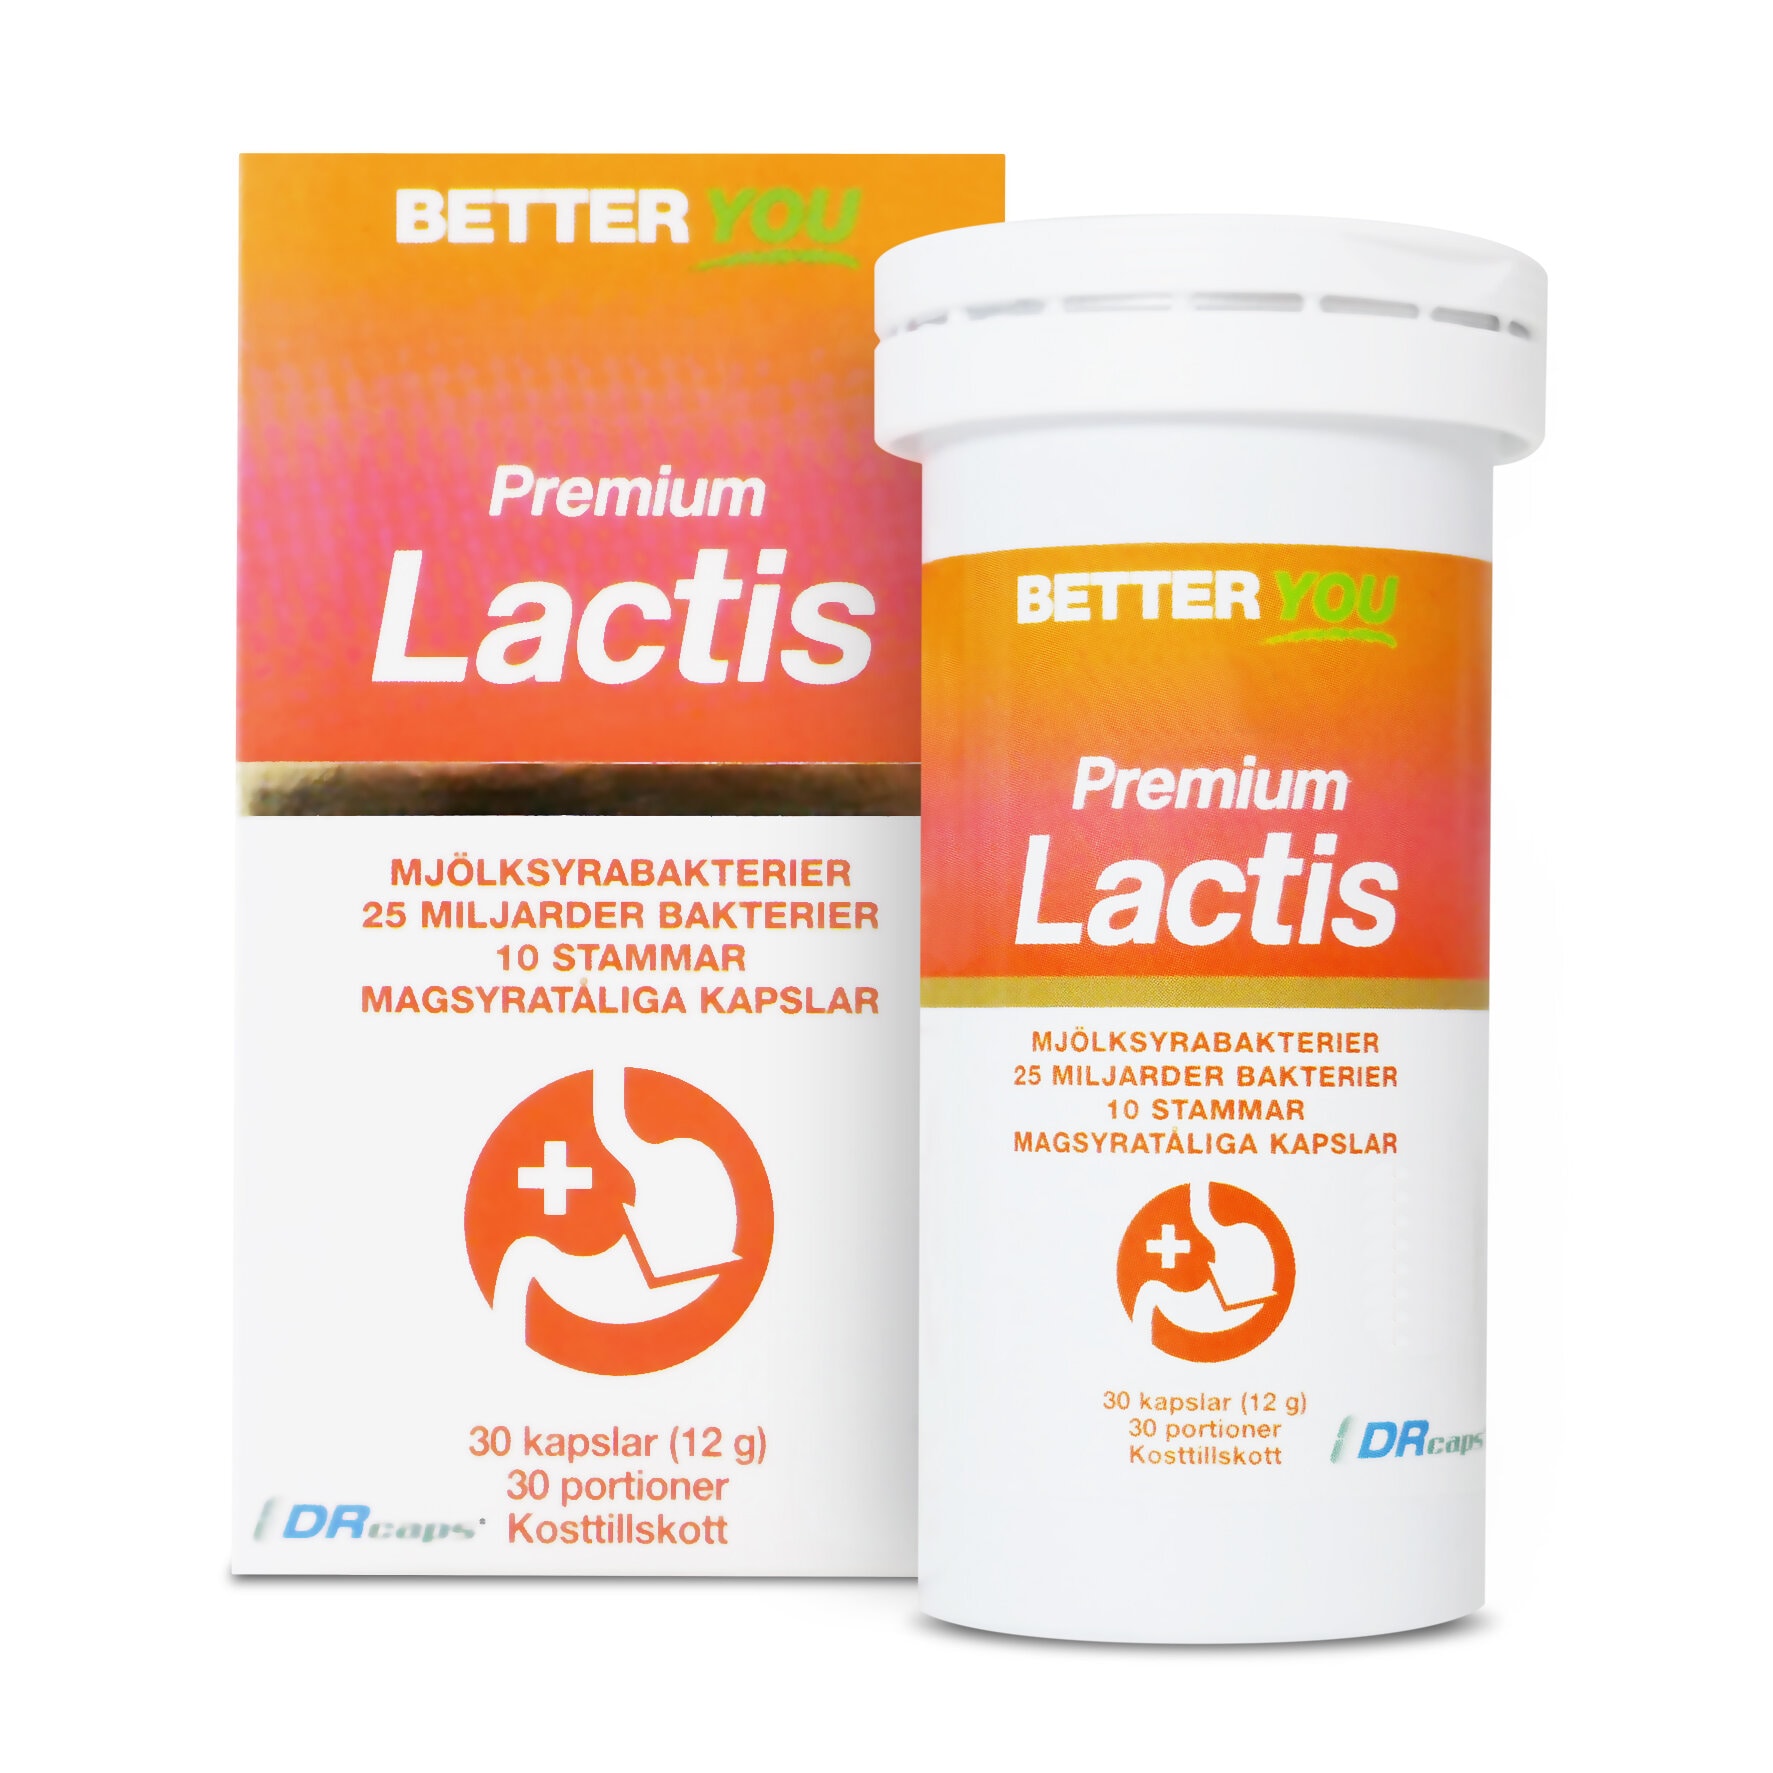 Premium Lactis 30 kapslar